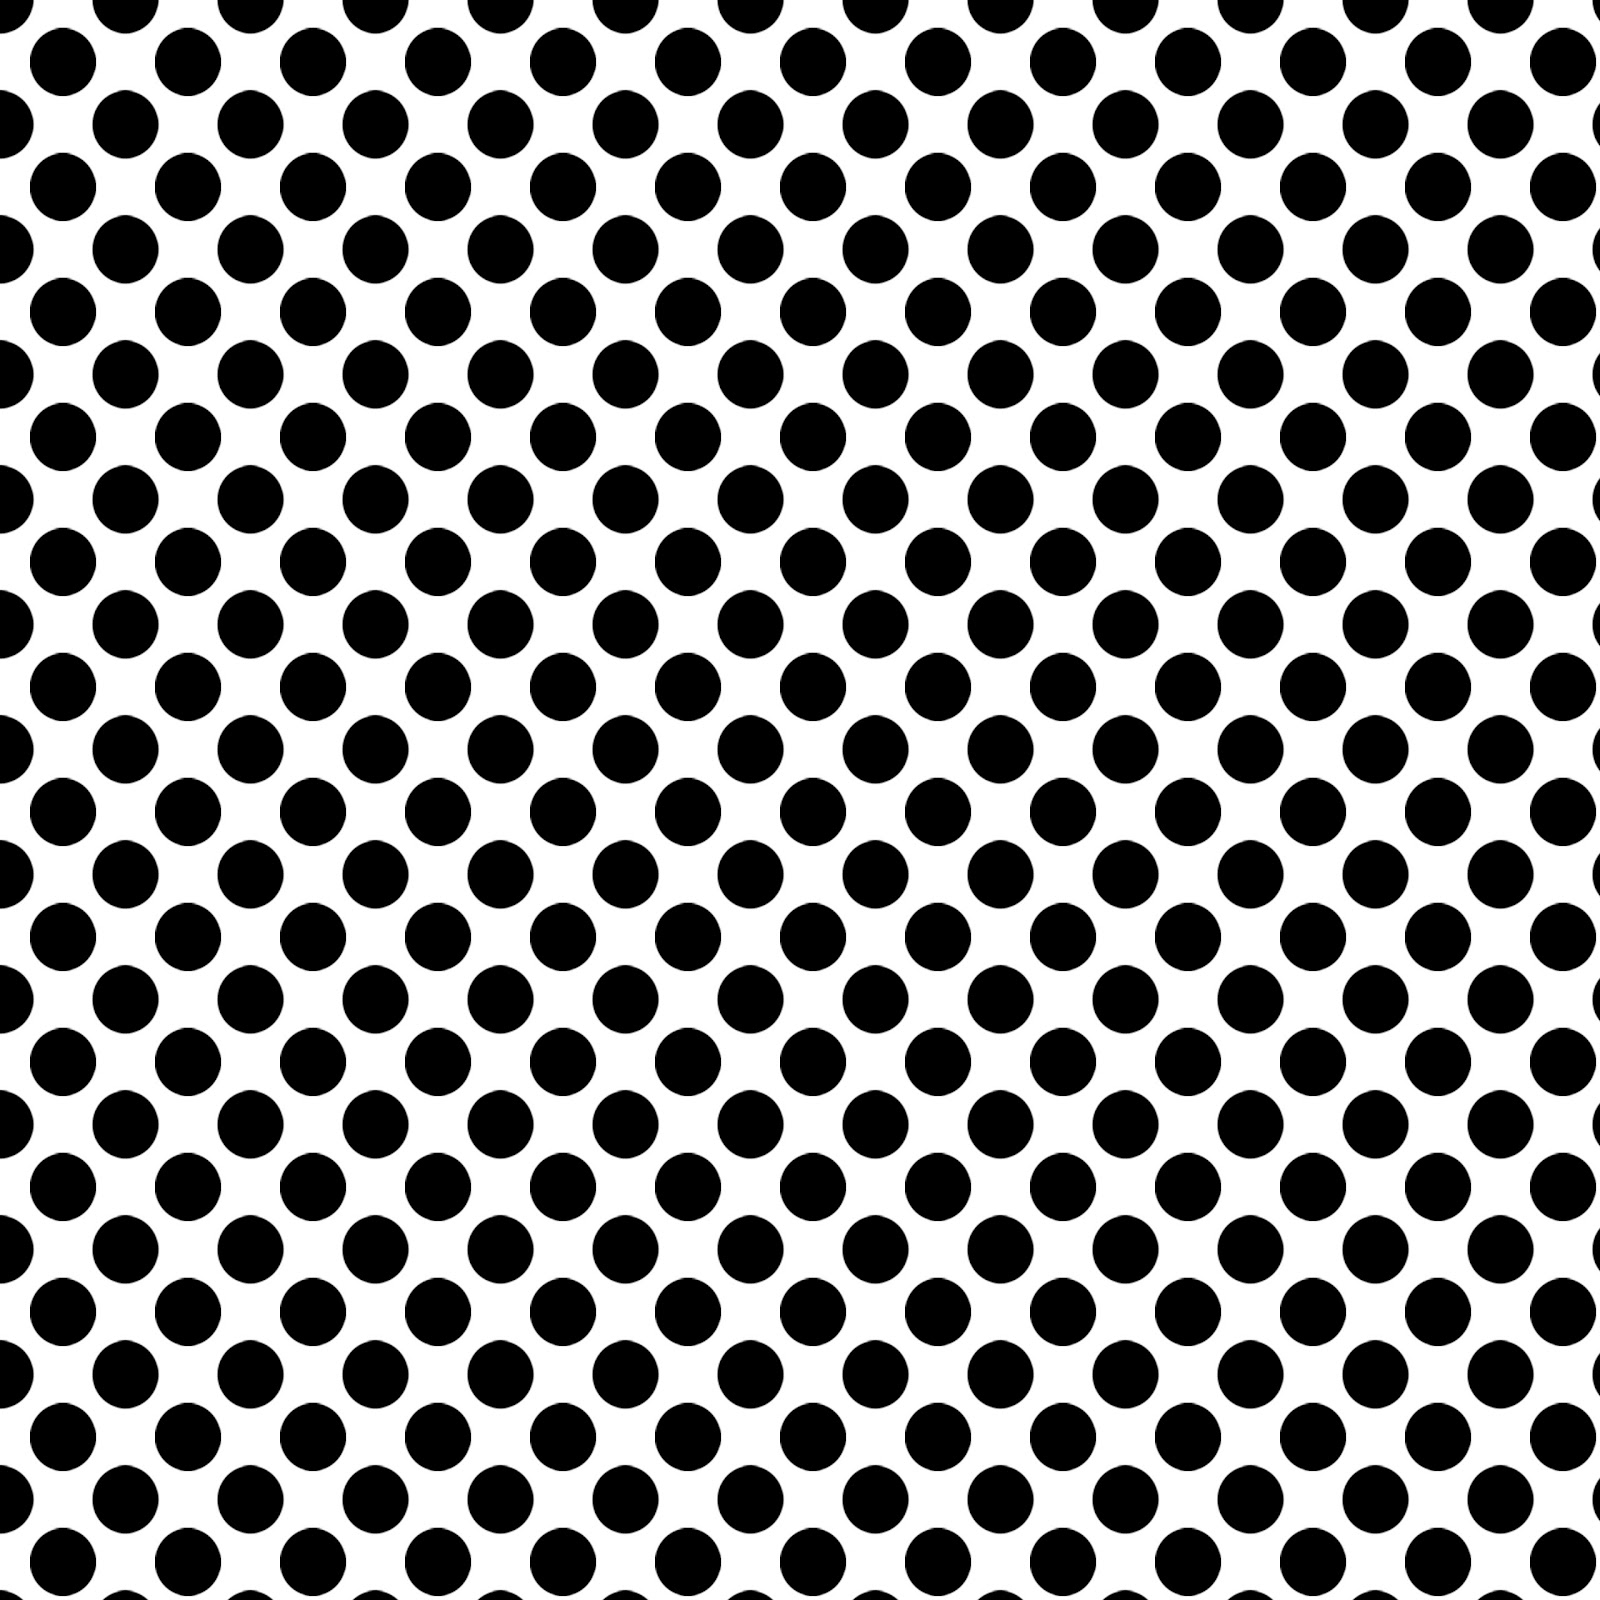 Black and White Spot Wallpaper - WallpaperSafari